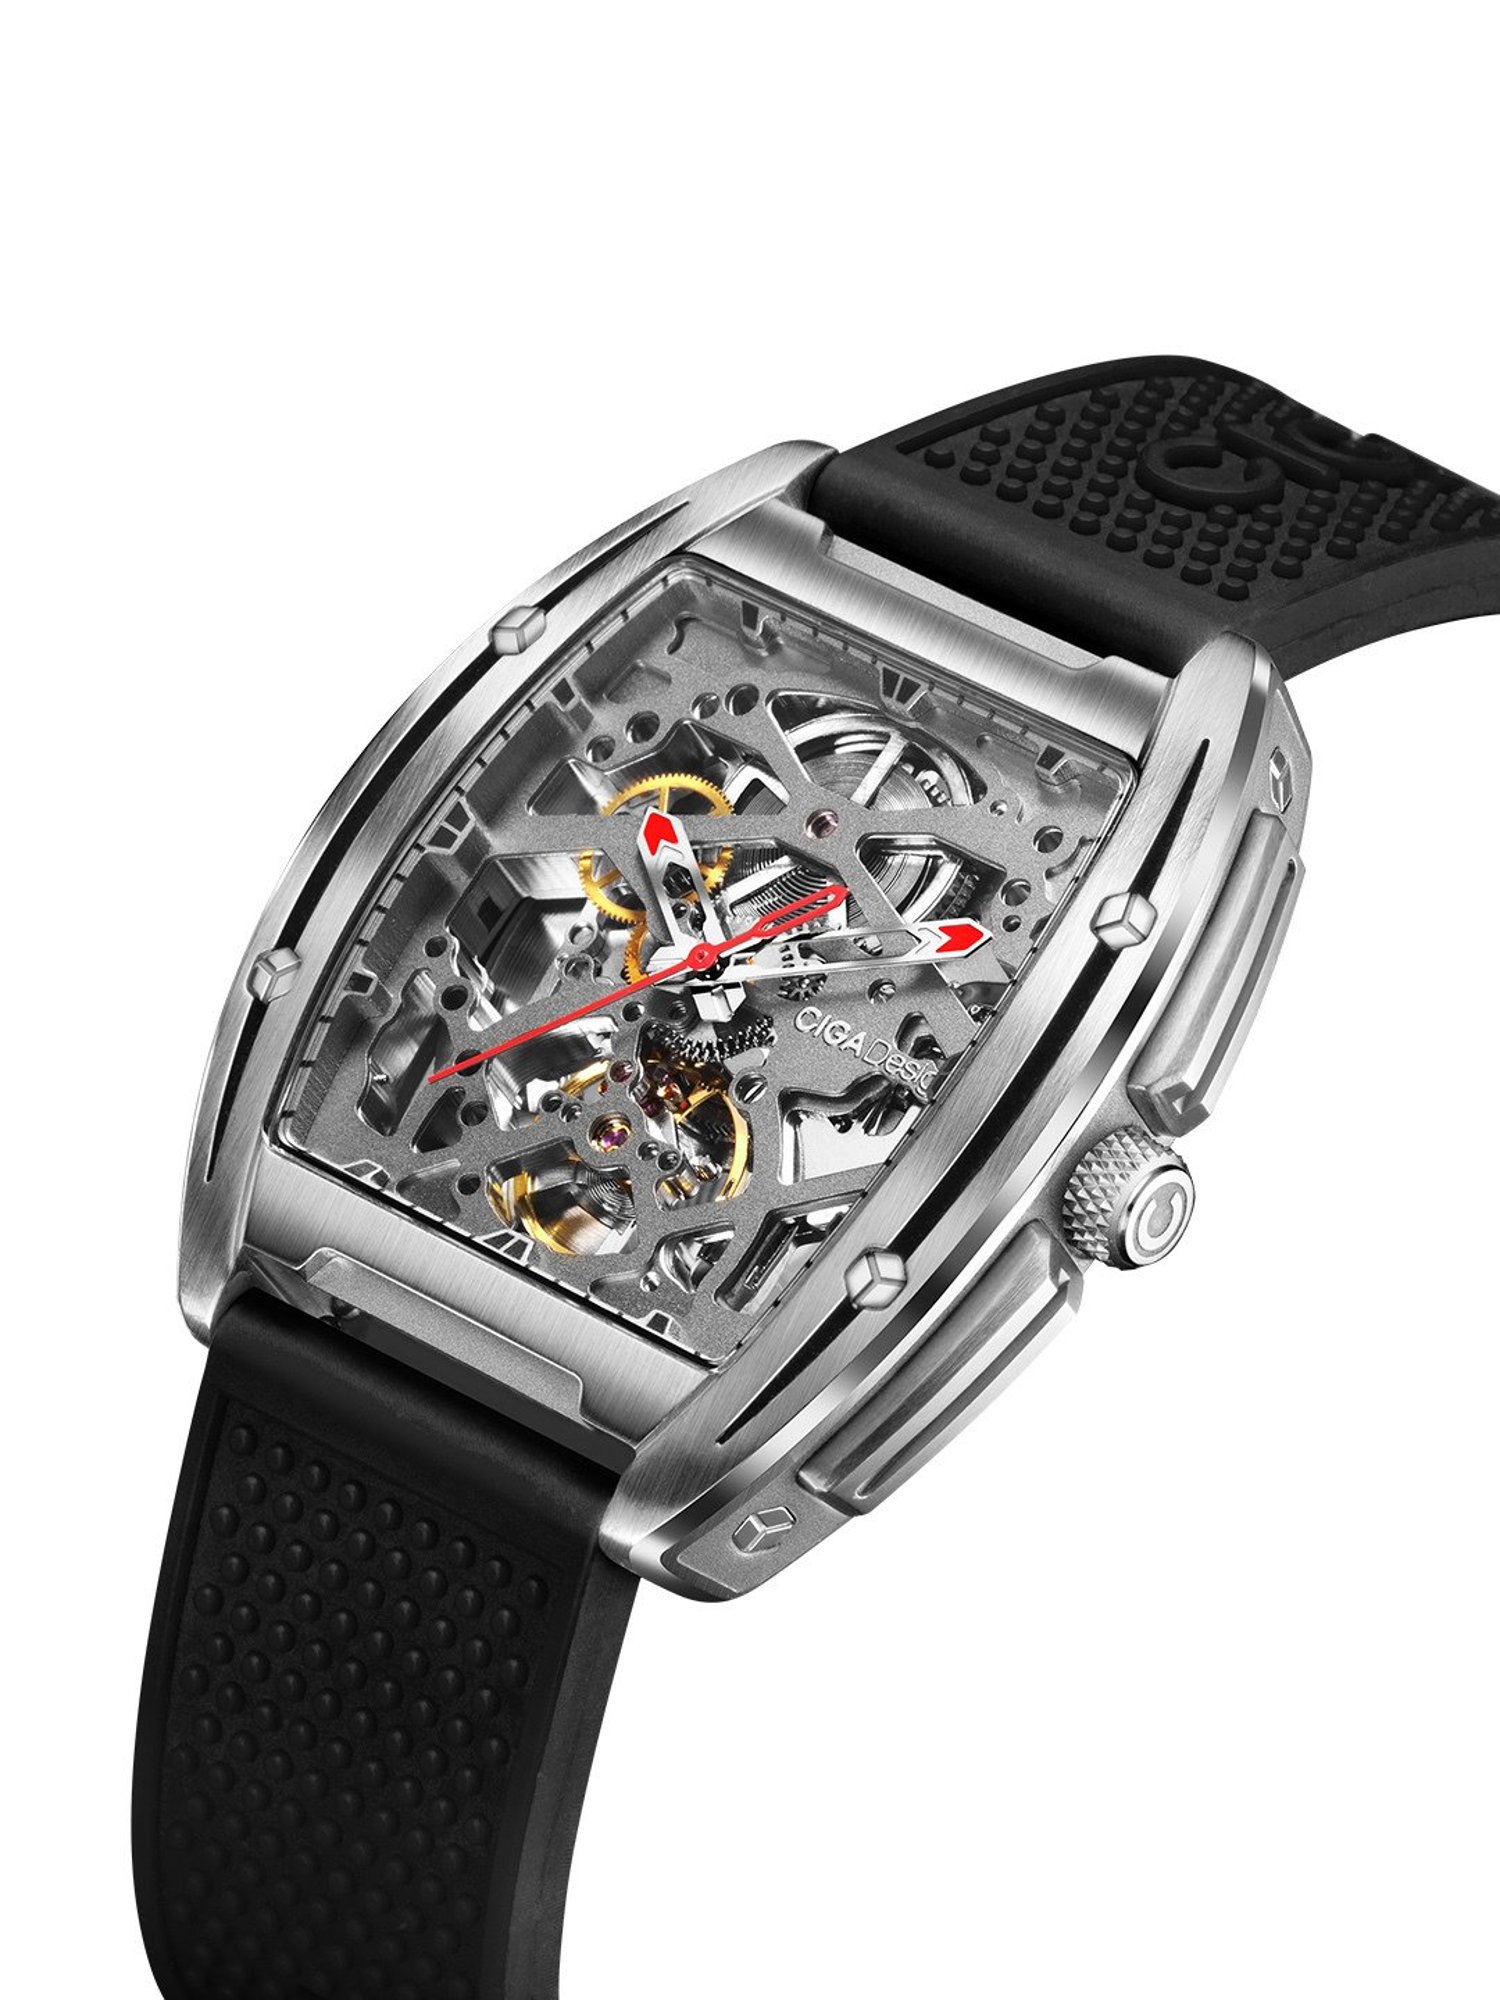 CIGA Design X Series Titanium Mechanical Watch | Indiegogo